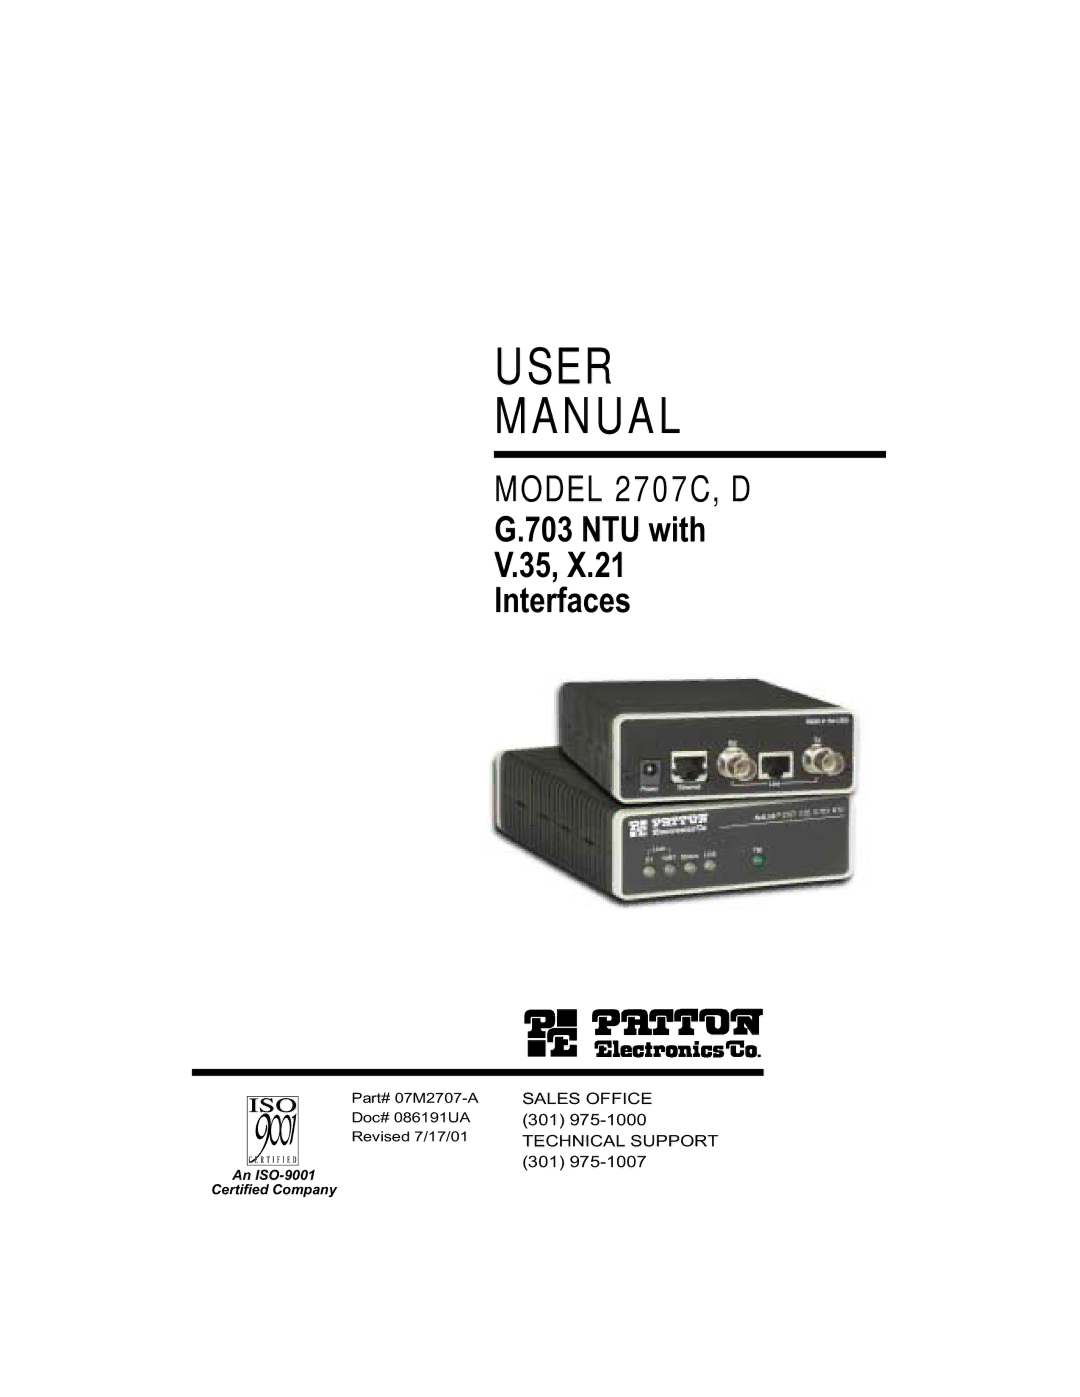 Patton electronic 2707D, 2707C user manual User Manual, 5HYLVHG 7&+1,&$/6833257 